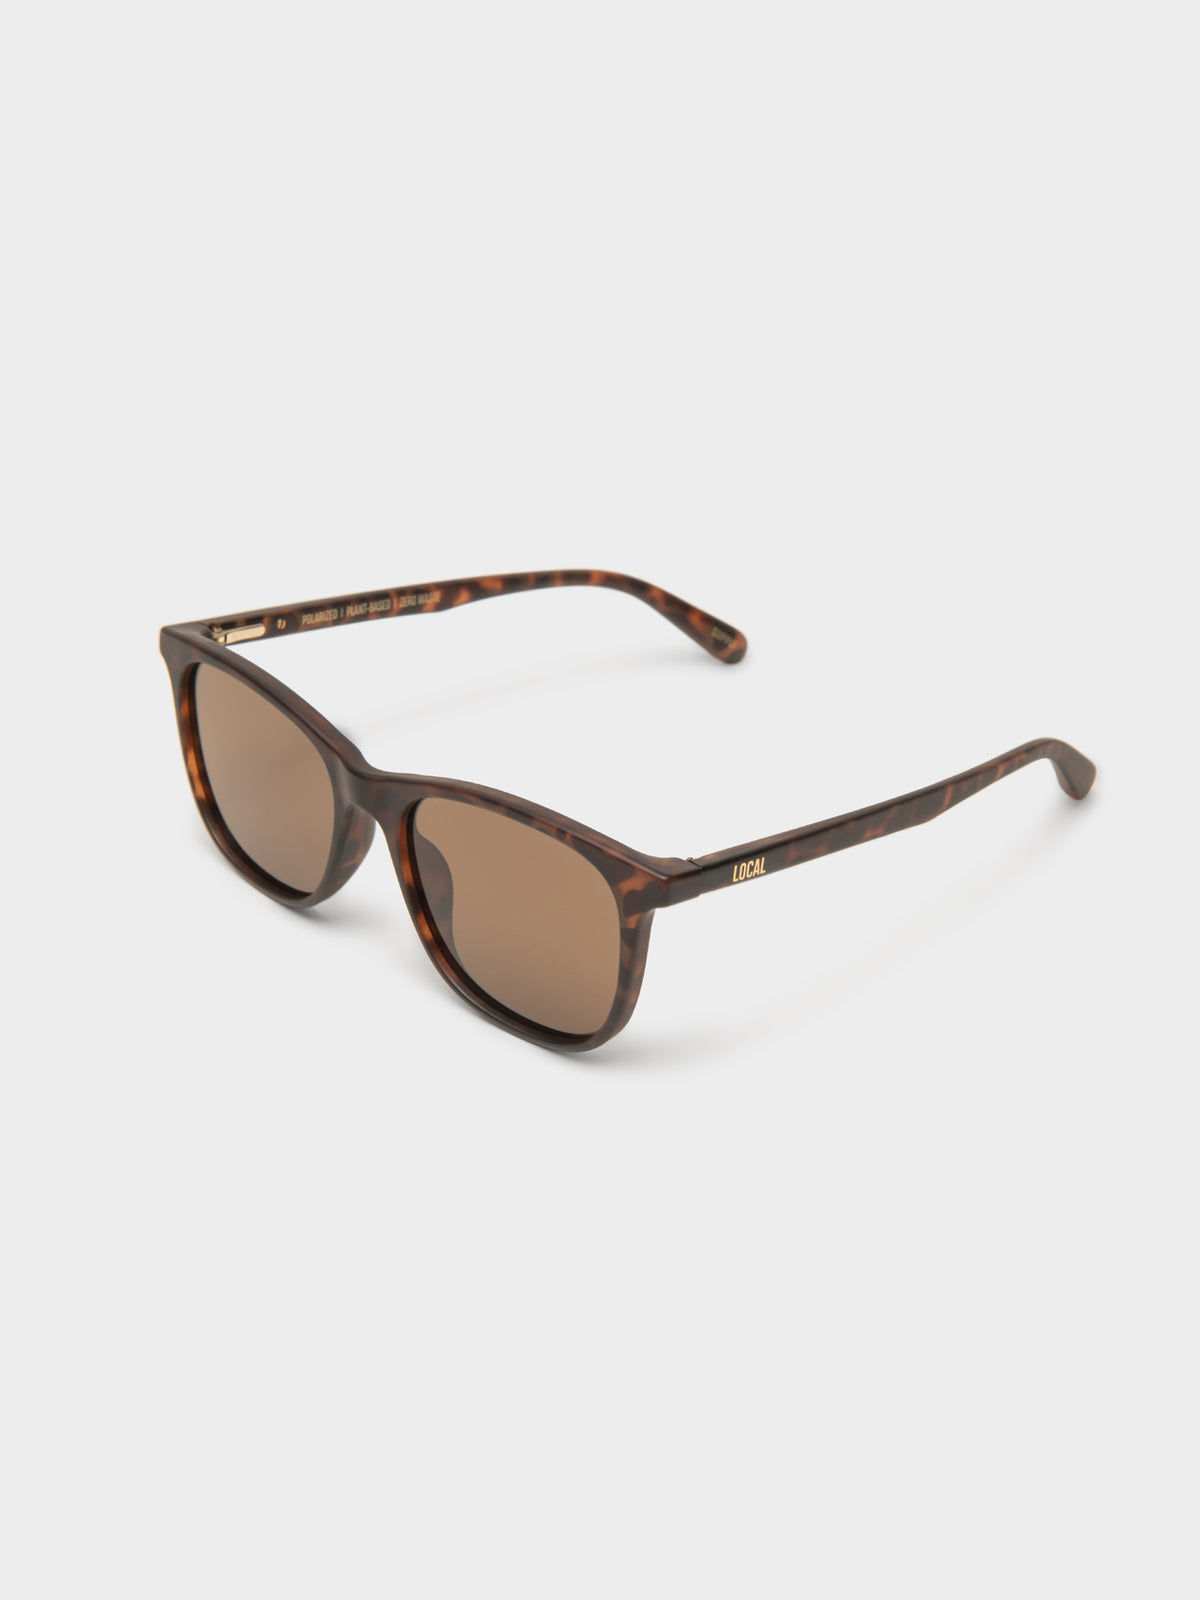 DRW Polarised Sunglasses in Brown Tortoiseshell